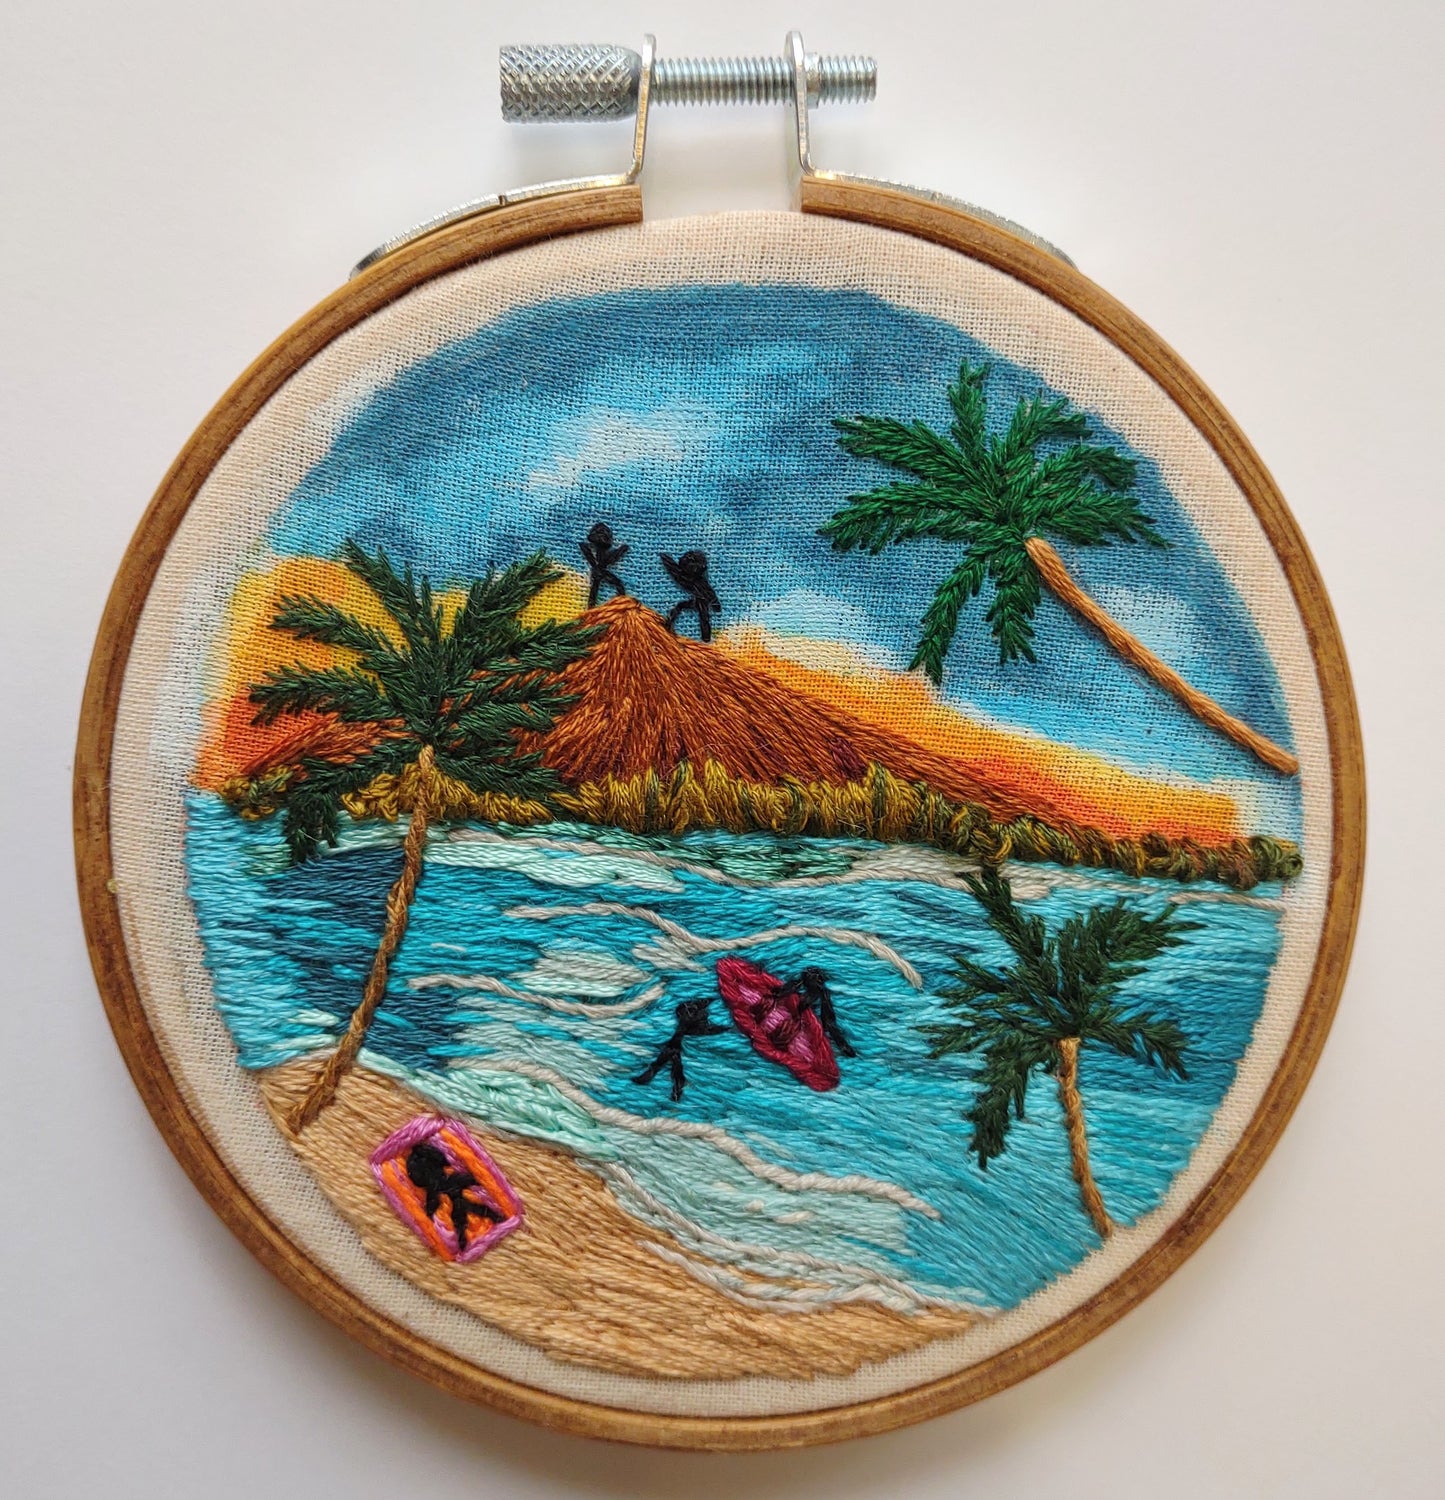 Hidden Haven -Hand Embroidery Miniature Scenery Landscape Art- Wanderlust Collection